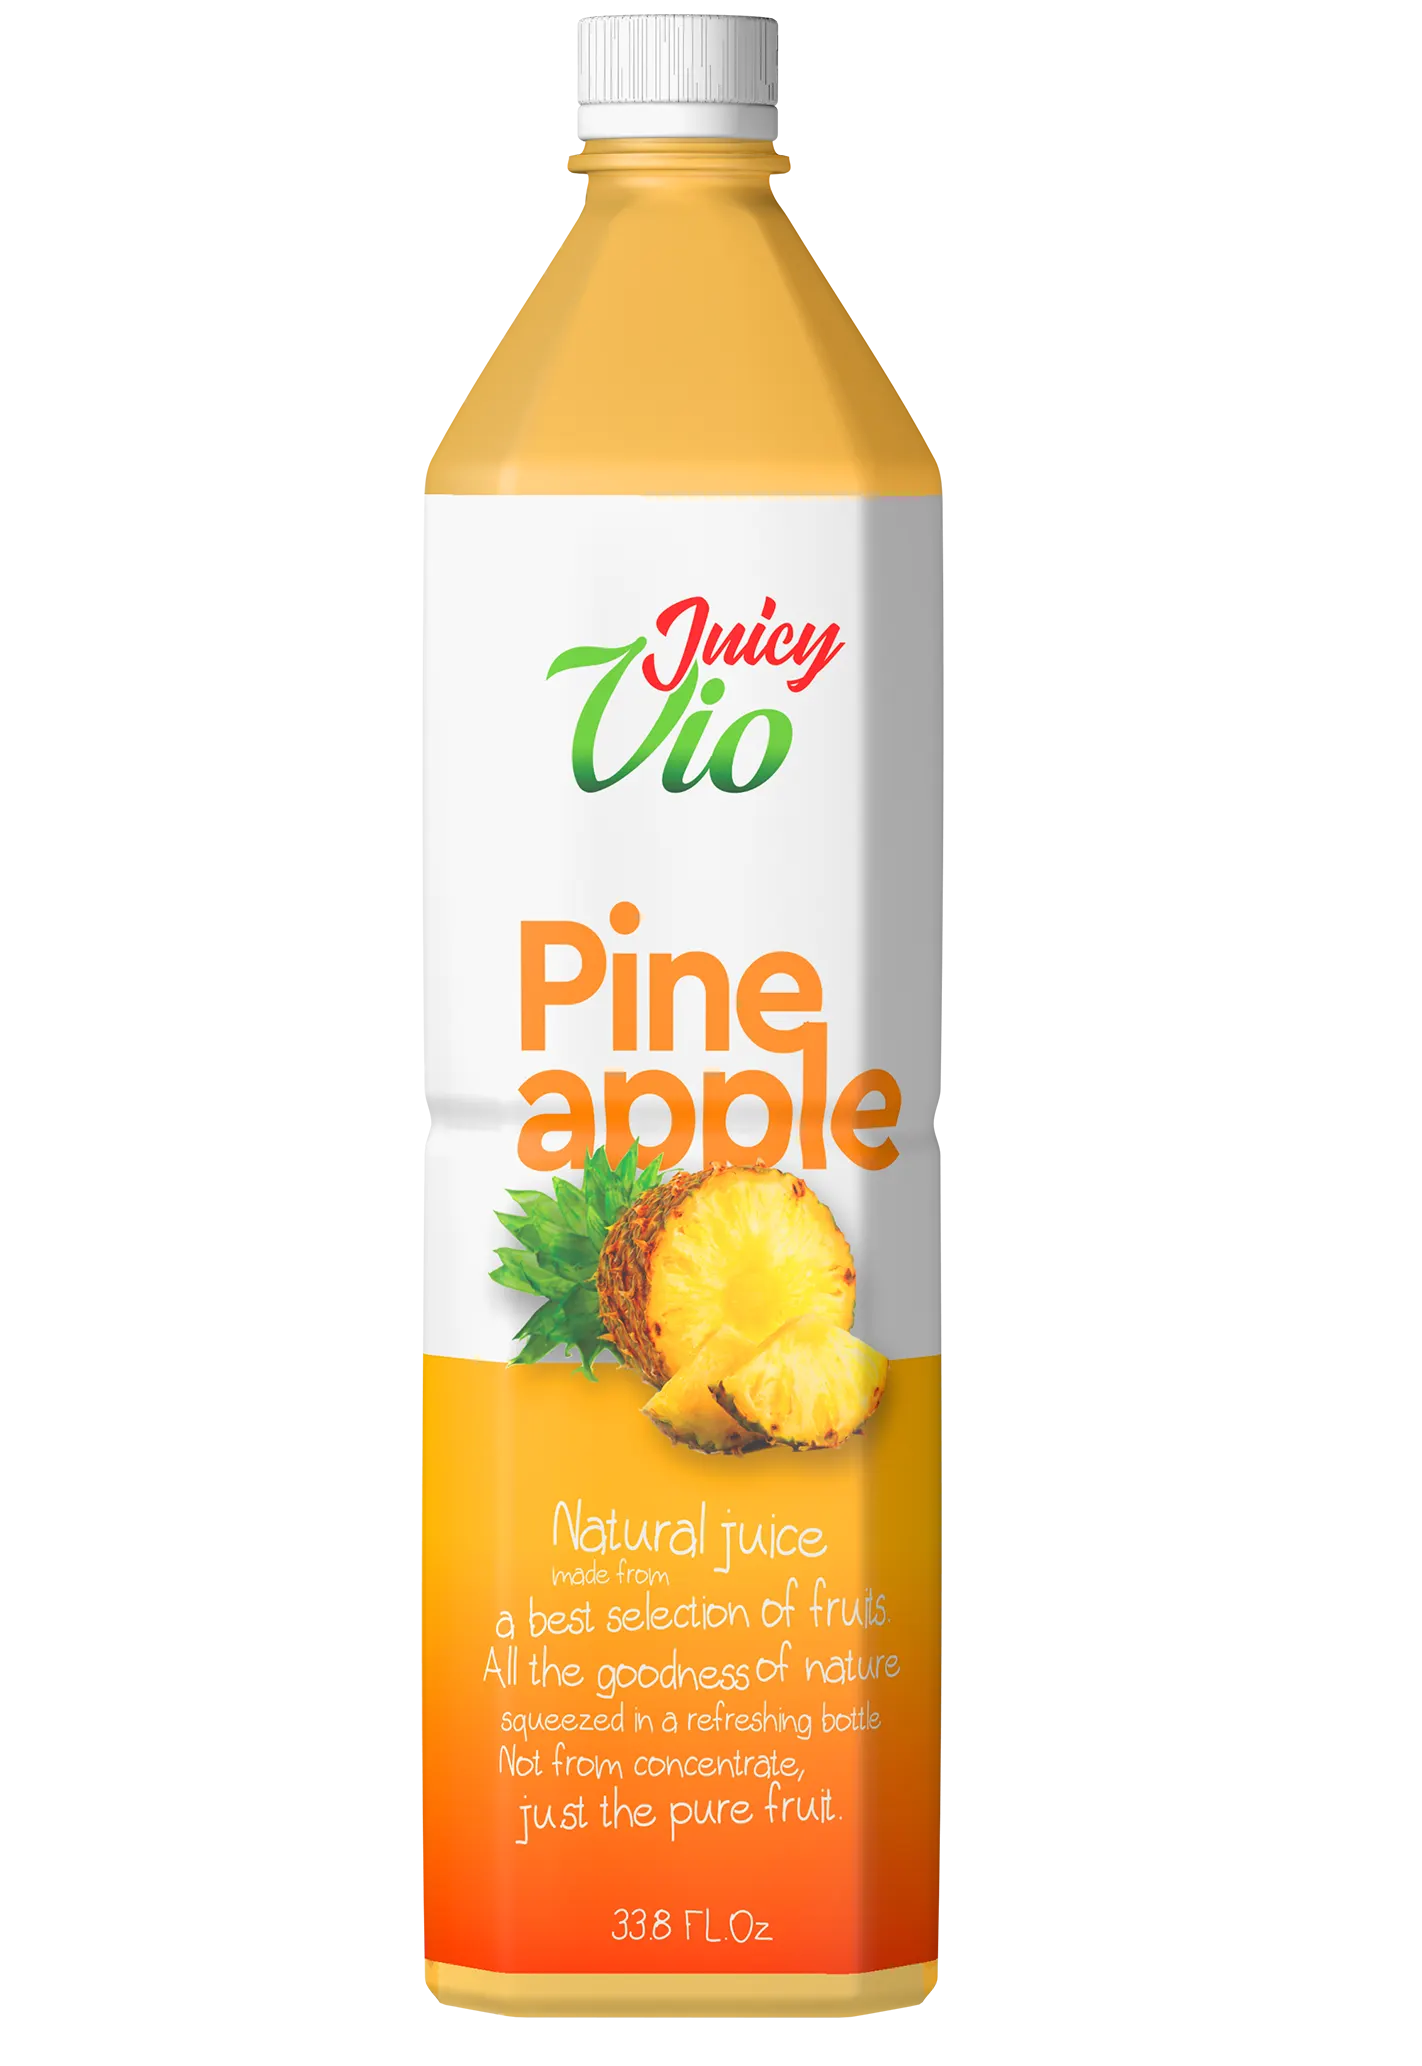 pineapple juice, wholesale distributors near me